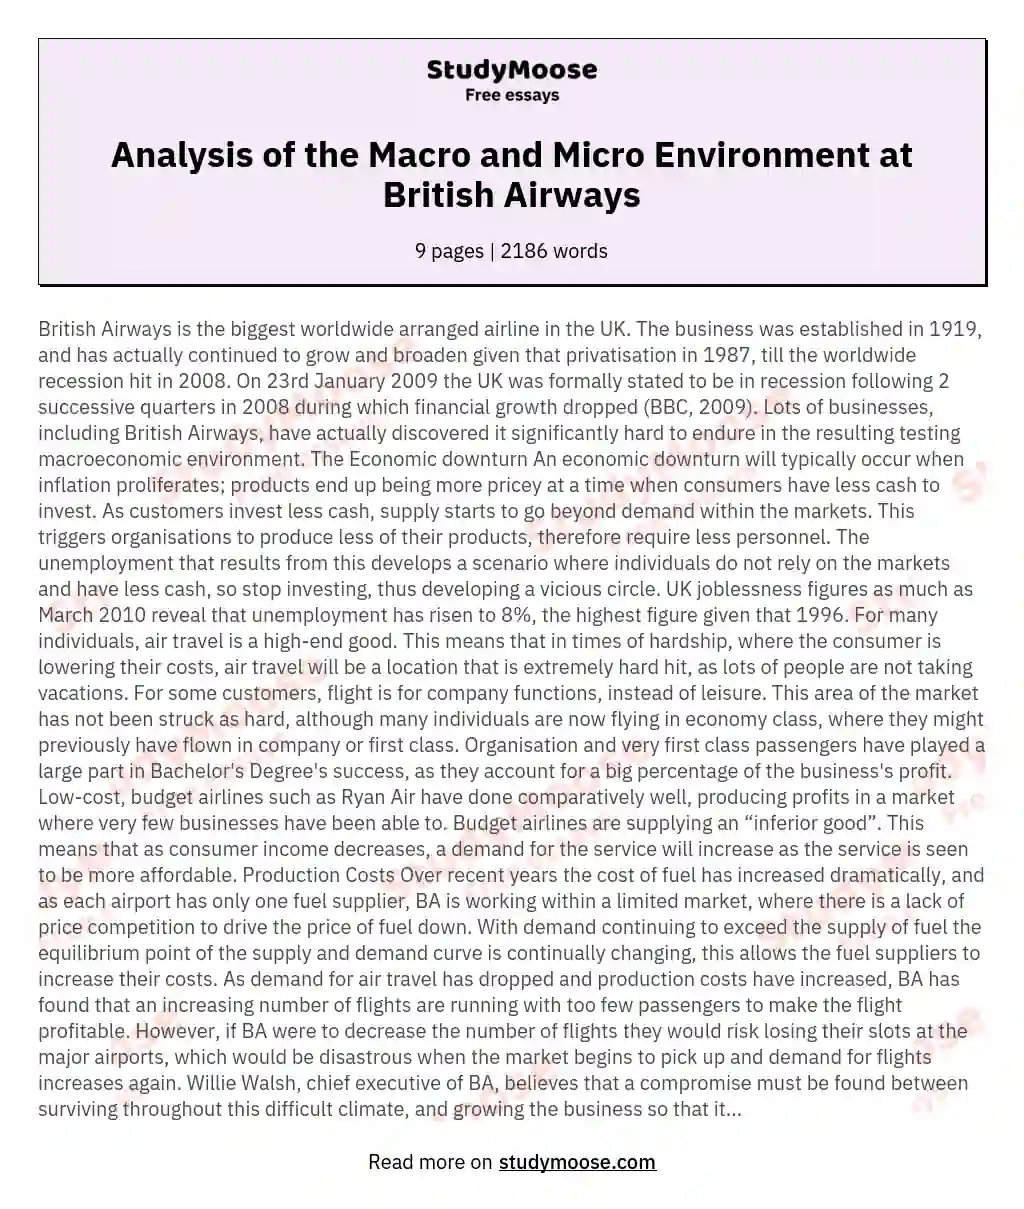 Analysis of the Macro and Micro Environment at British Airways